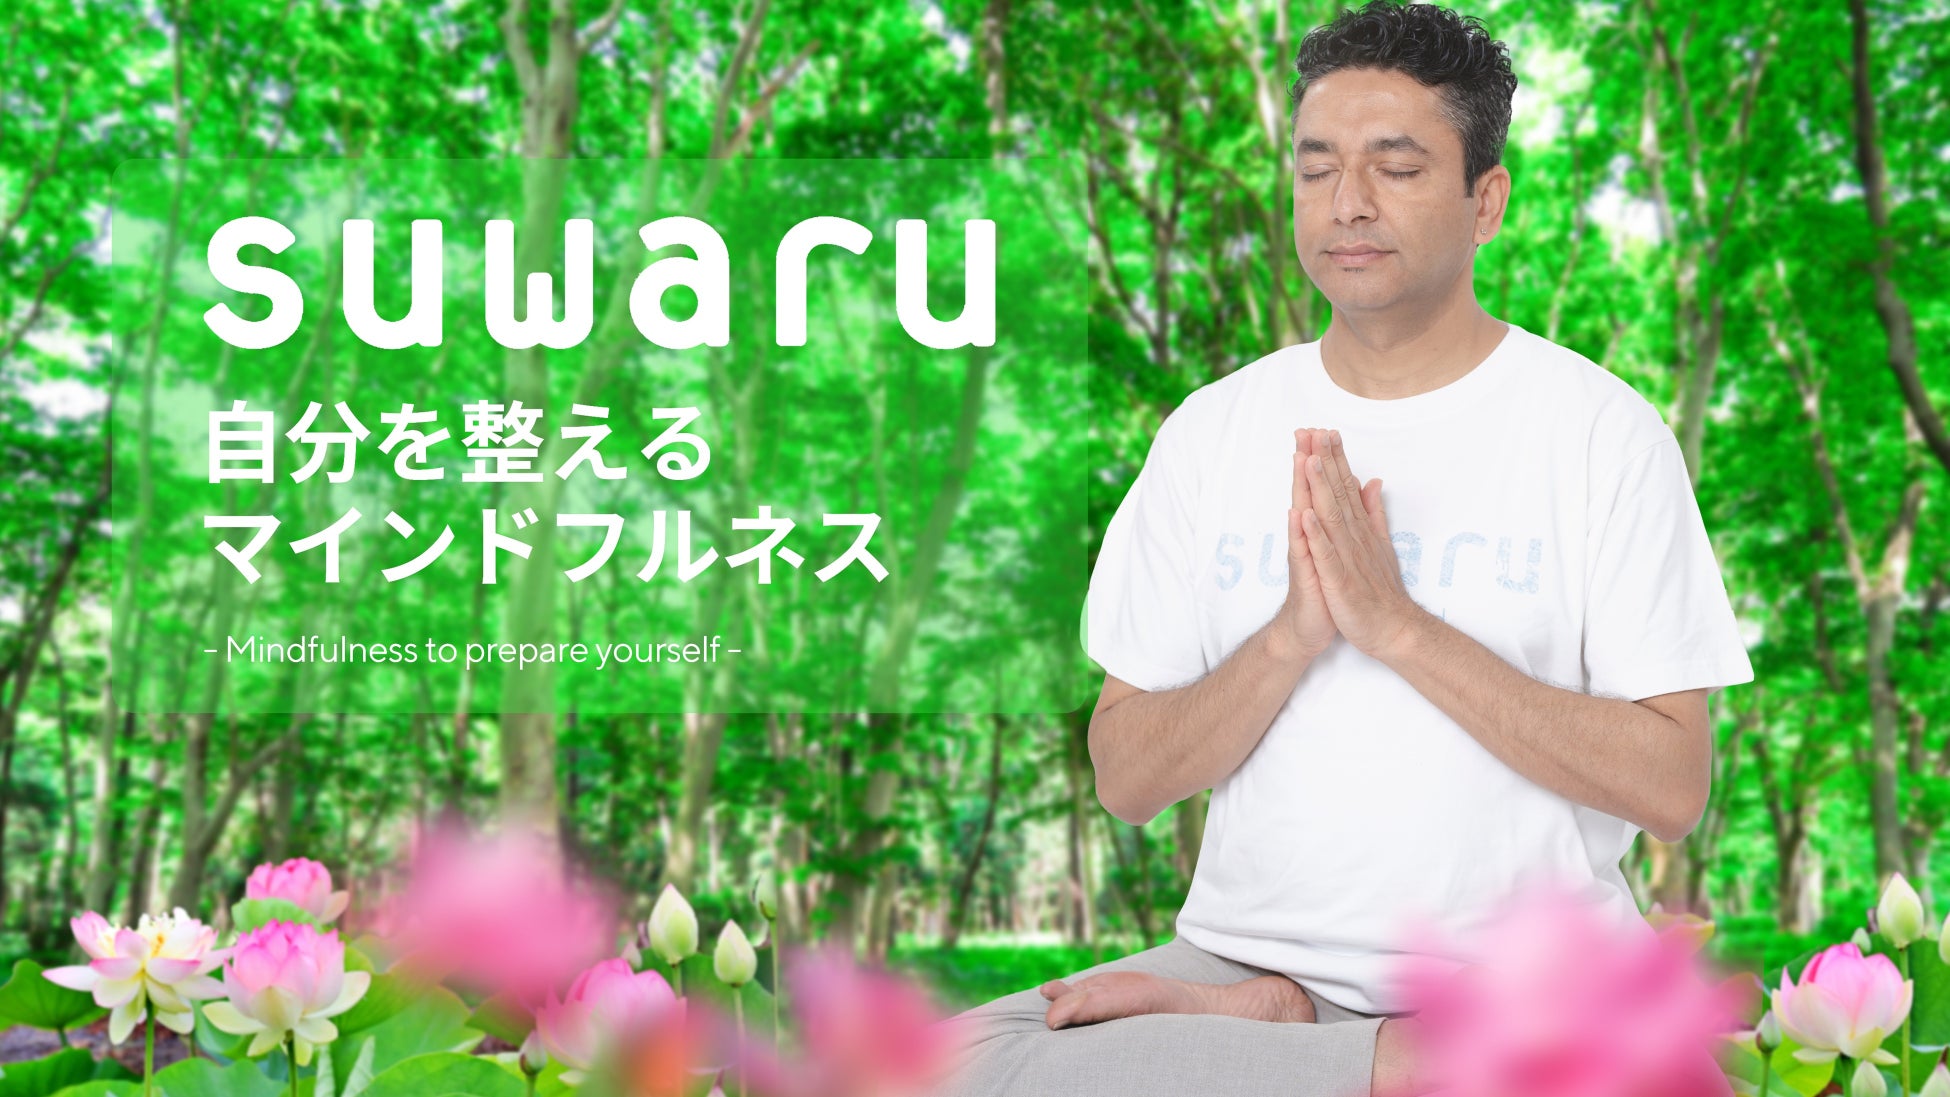 MIRROR FIT.とsuwaruがコラボレーションし、1週間で瞑想の基礎から本格的な瞑想が体験できるコンテンツの配信を開始